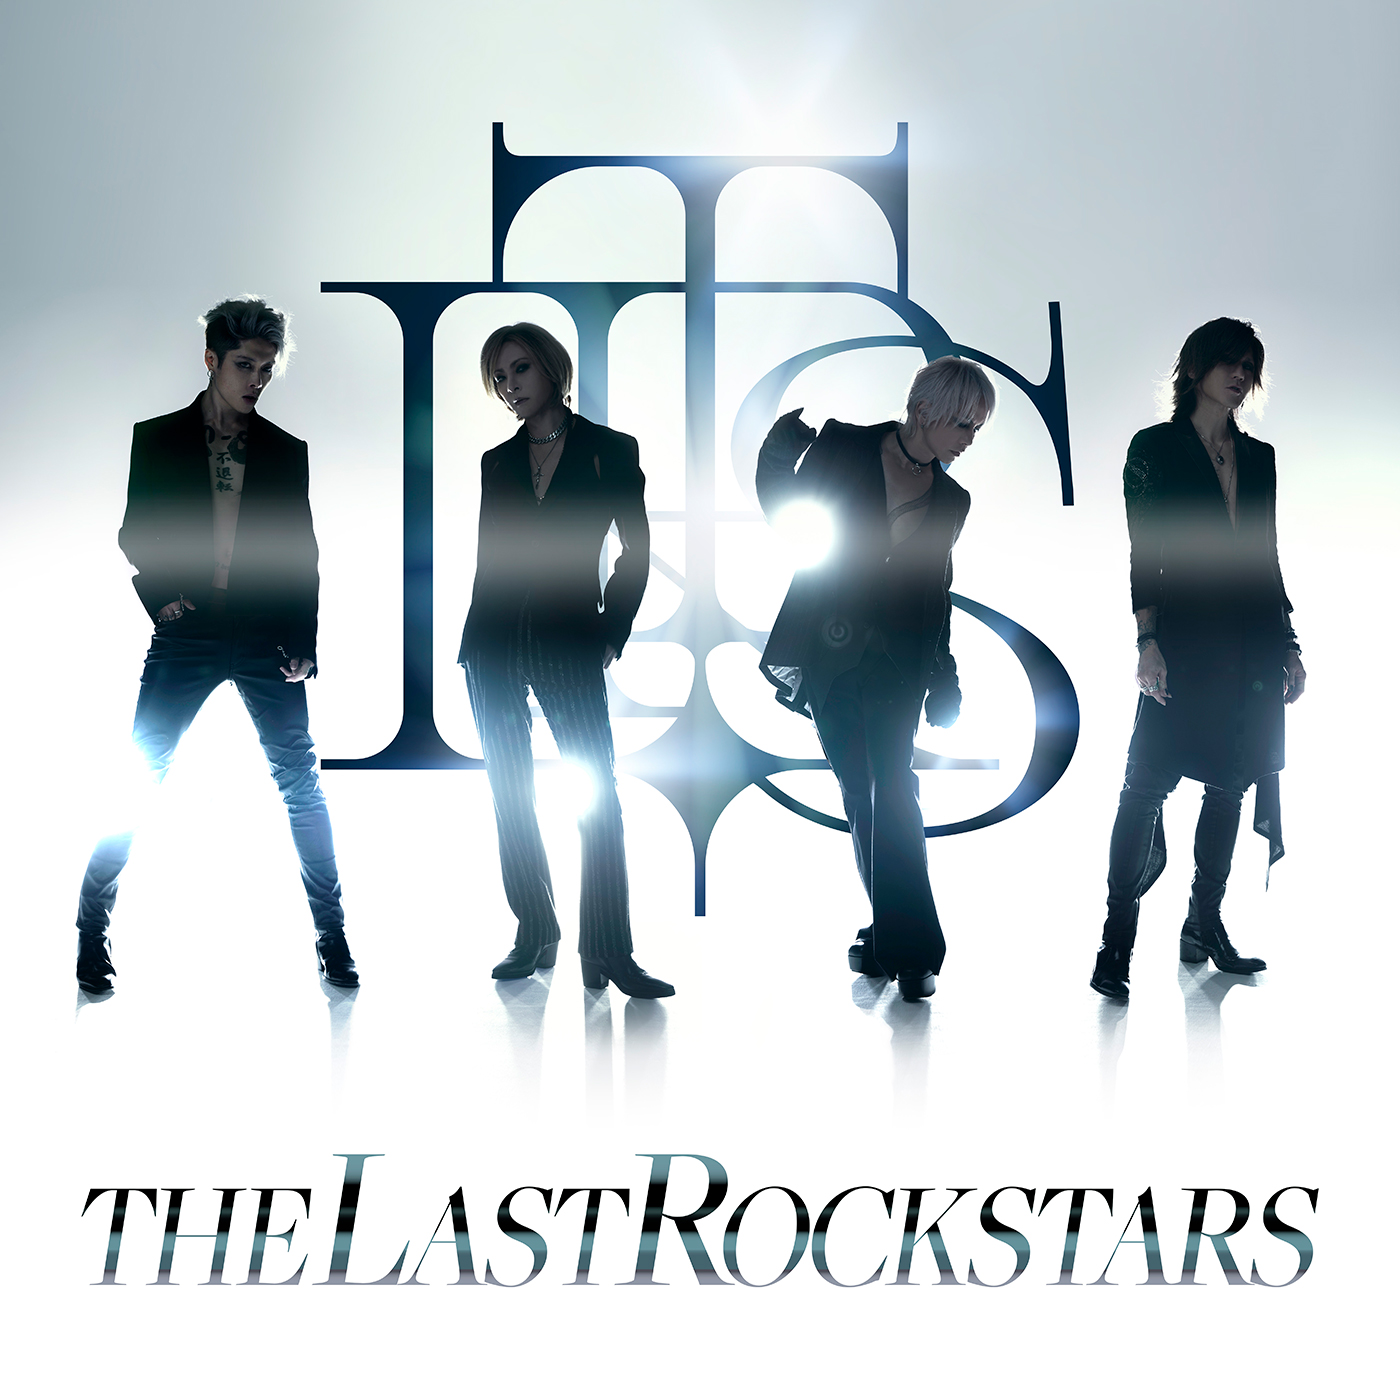 THE LAST ROCKSTARS、1stシングル「THE LAST ROCKSTARS（Paris Mix）」のMV公開 - 画像一覧（1/2）